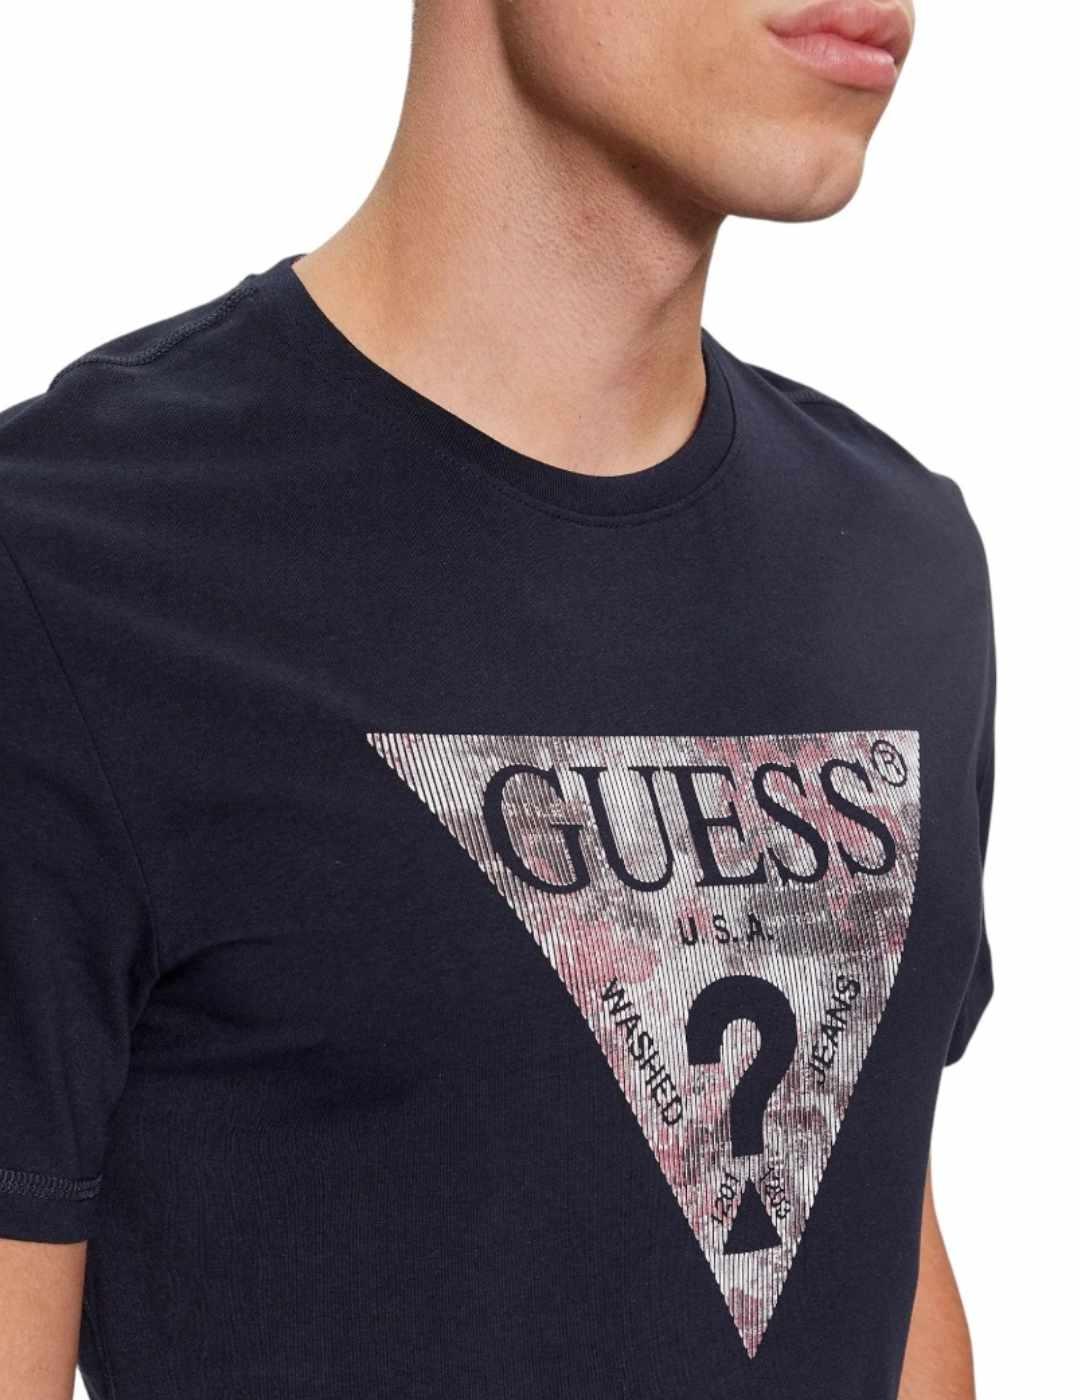 Camiseta Guess Triangle azul marino manga corta para hombre